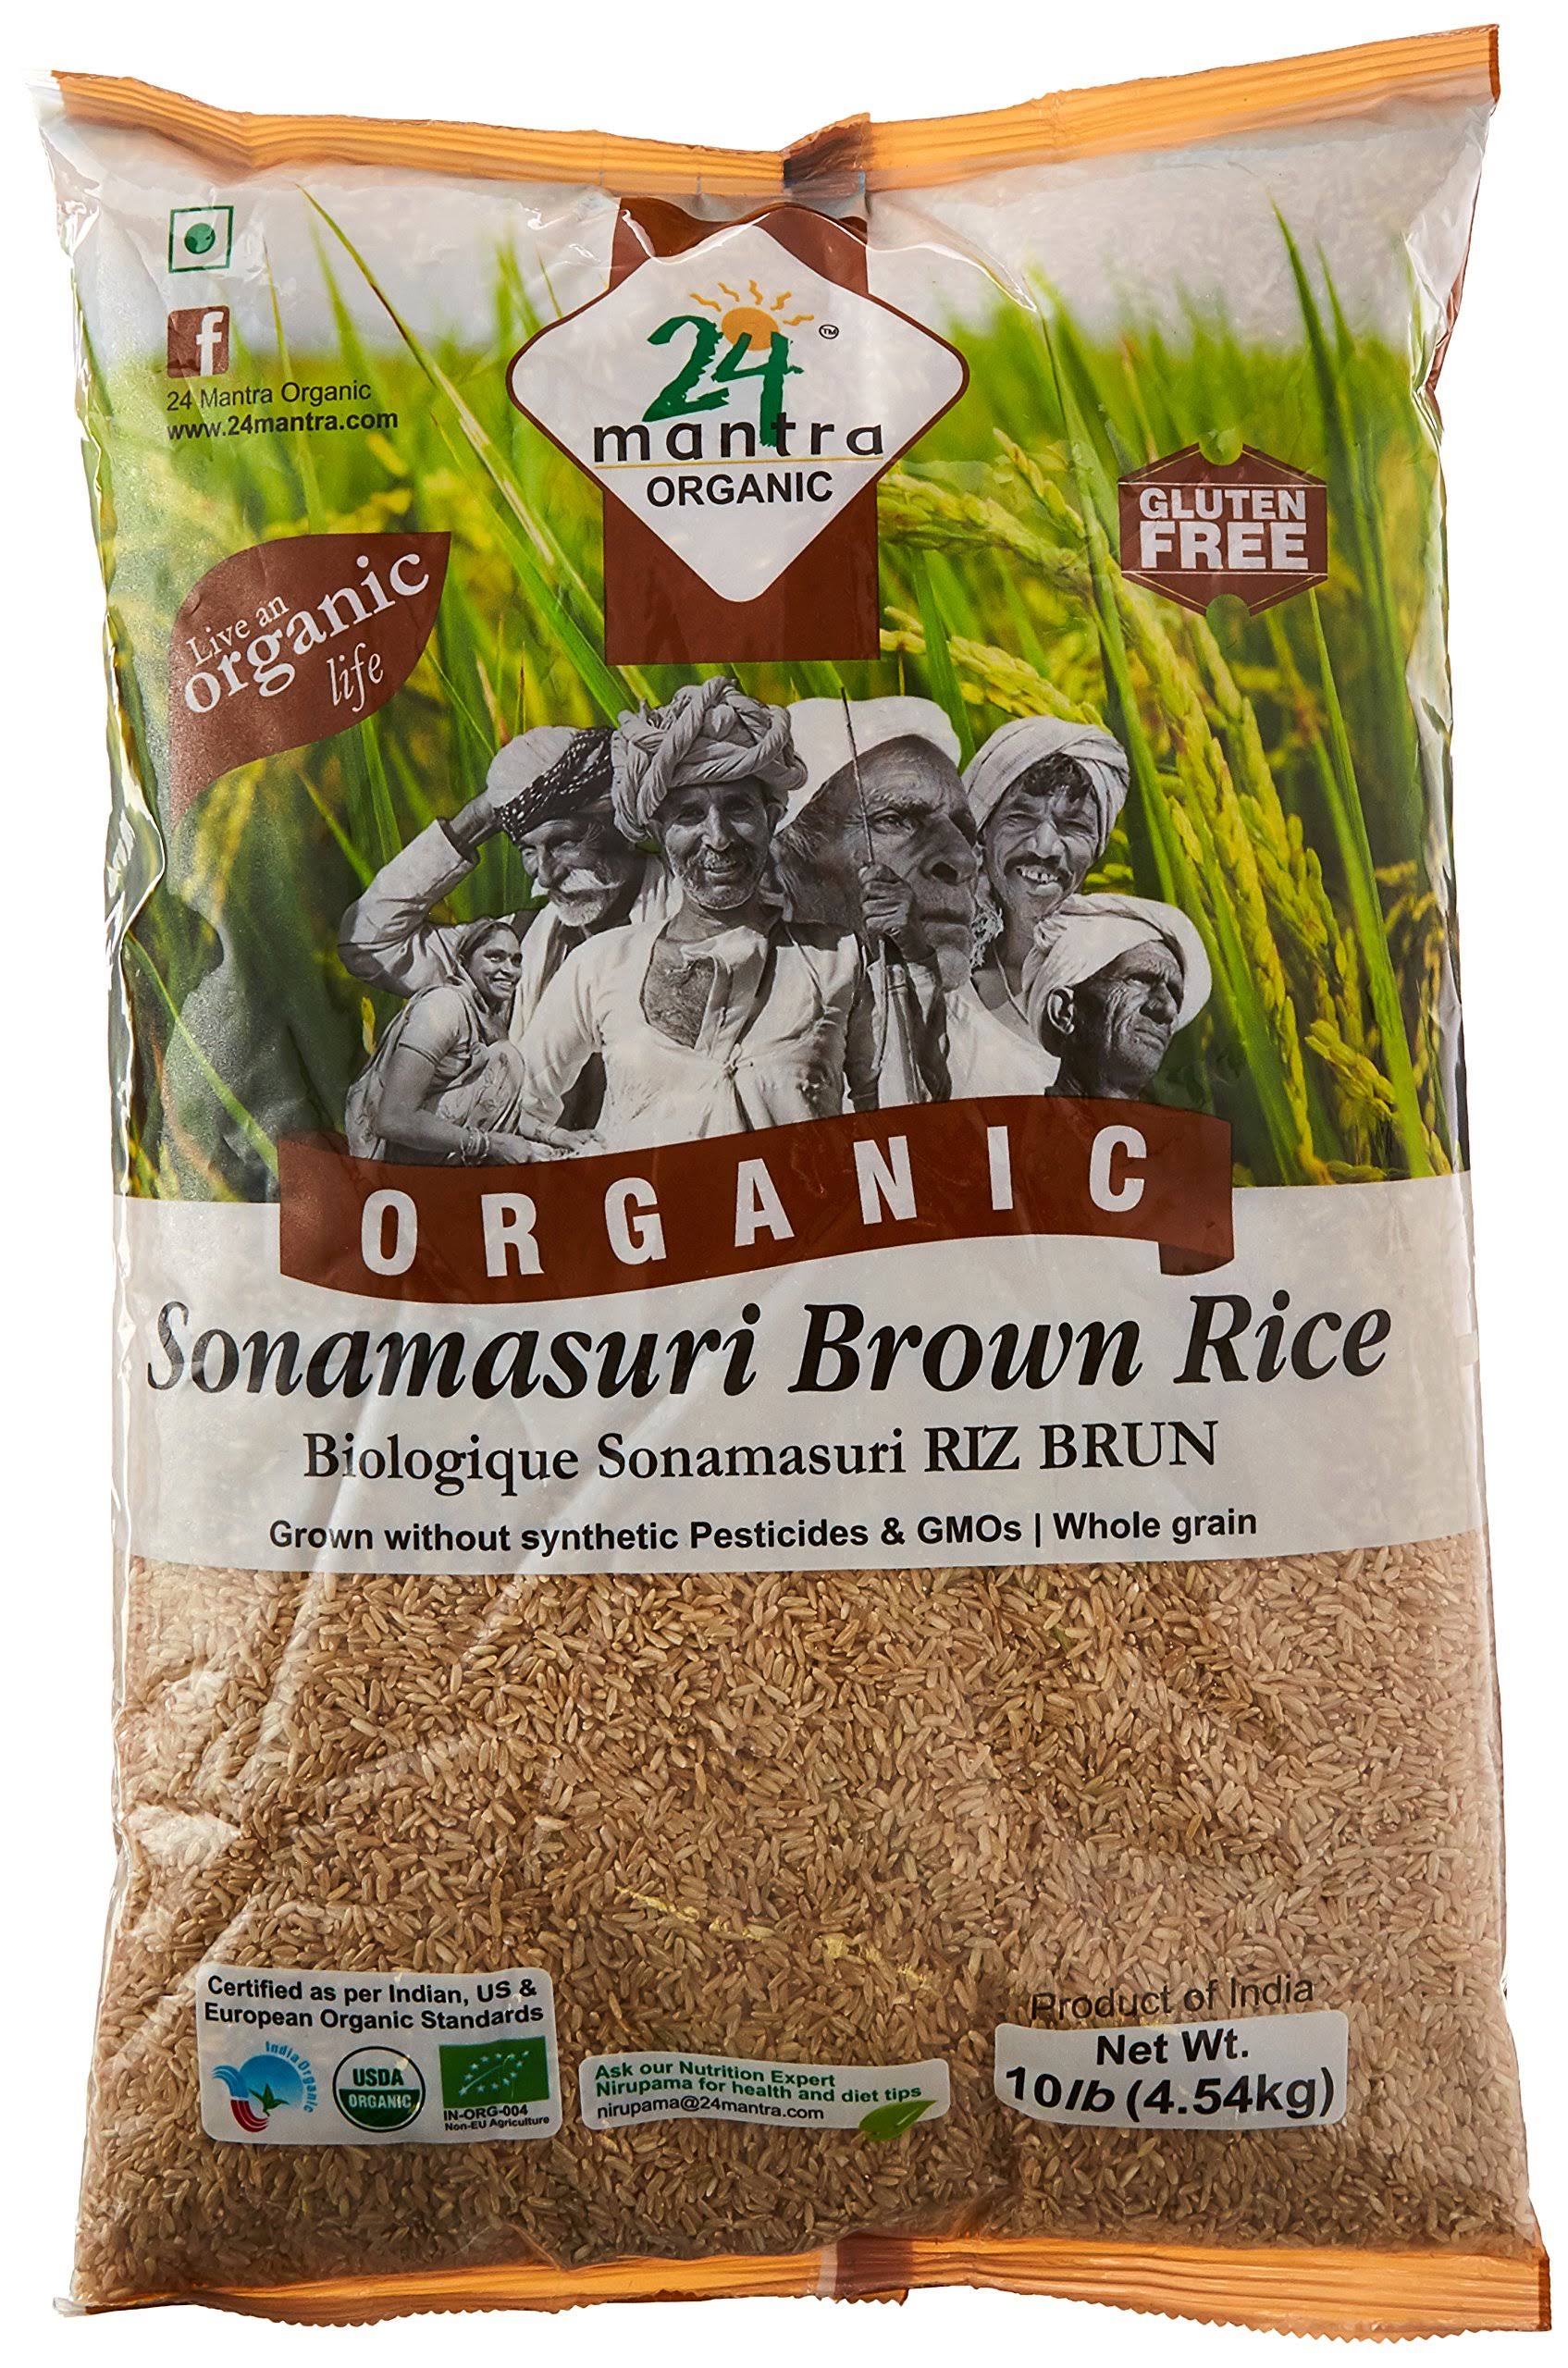 24 Letter Mantra Organic Brown Sonamasoori Rice - 10 lbs